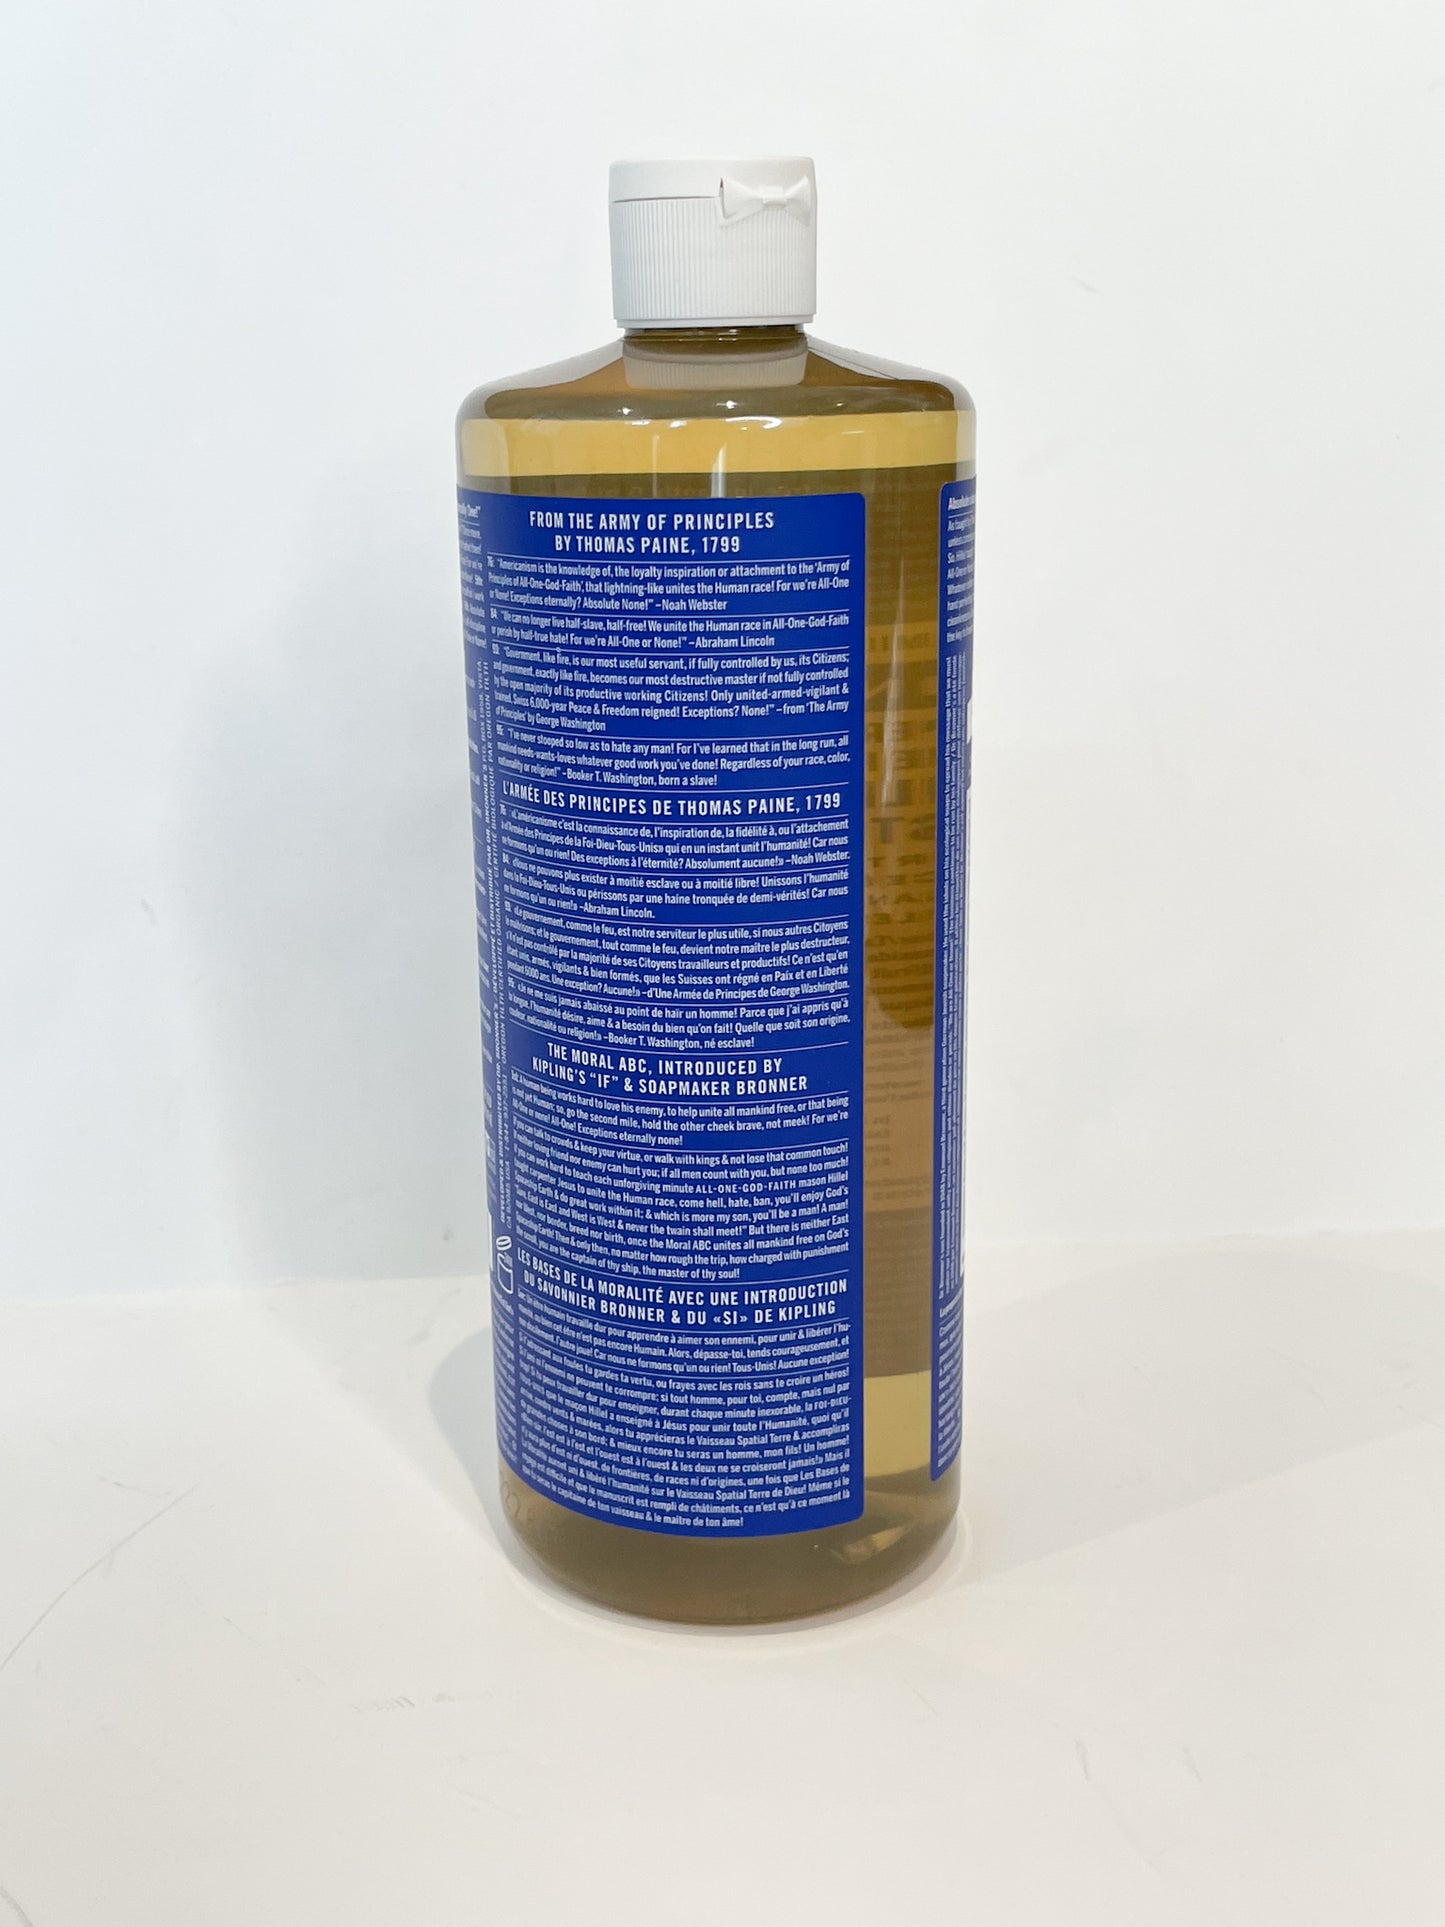 Peppermint - Dr. Bronner's Organic Pure Castile Liquid Soap - 946ml